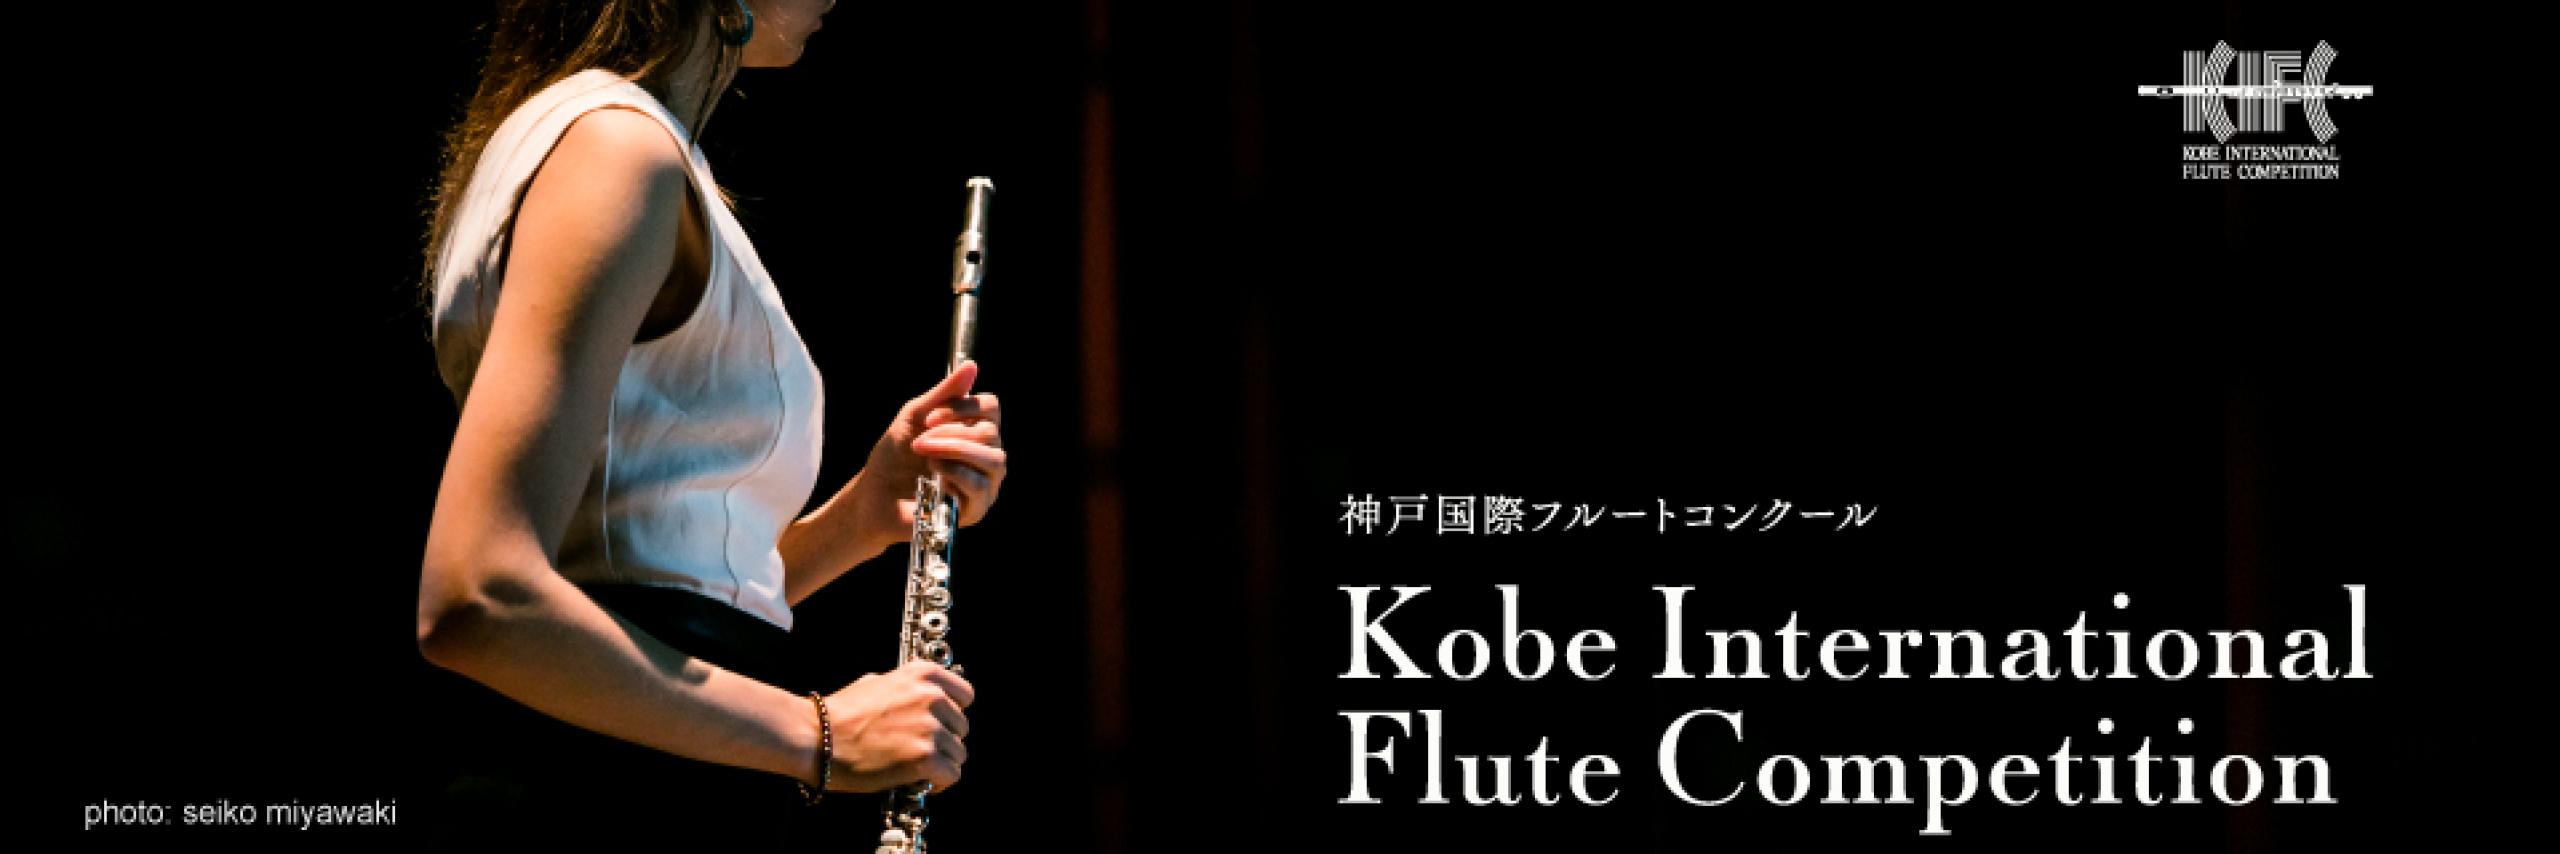 Kobe Kobe International Flute Competition World Federation of